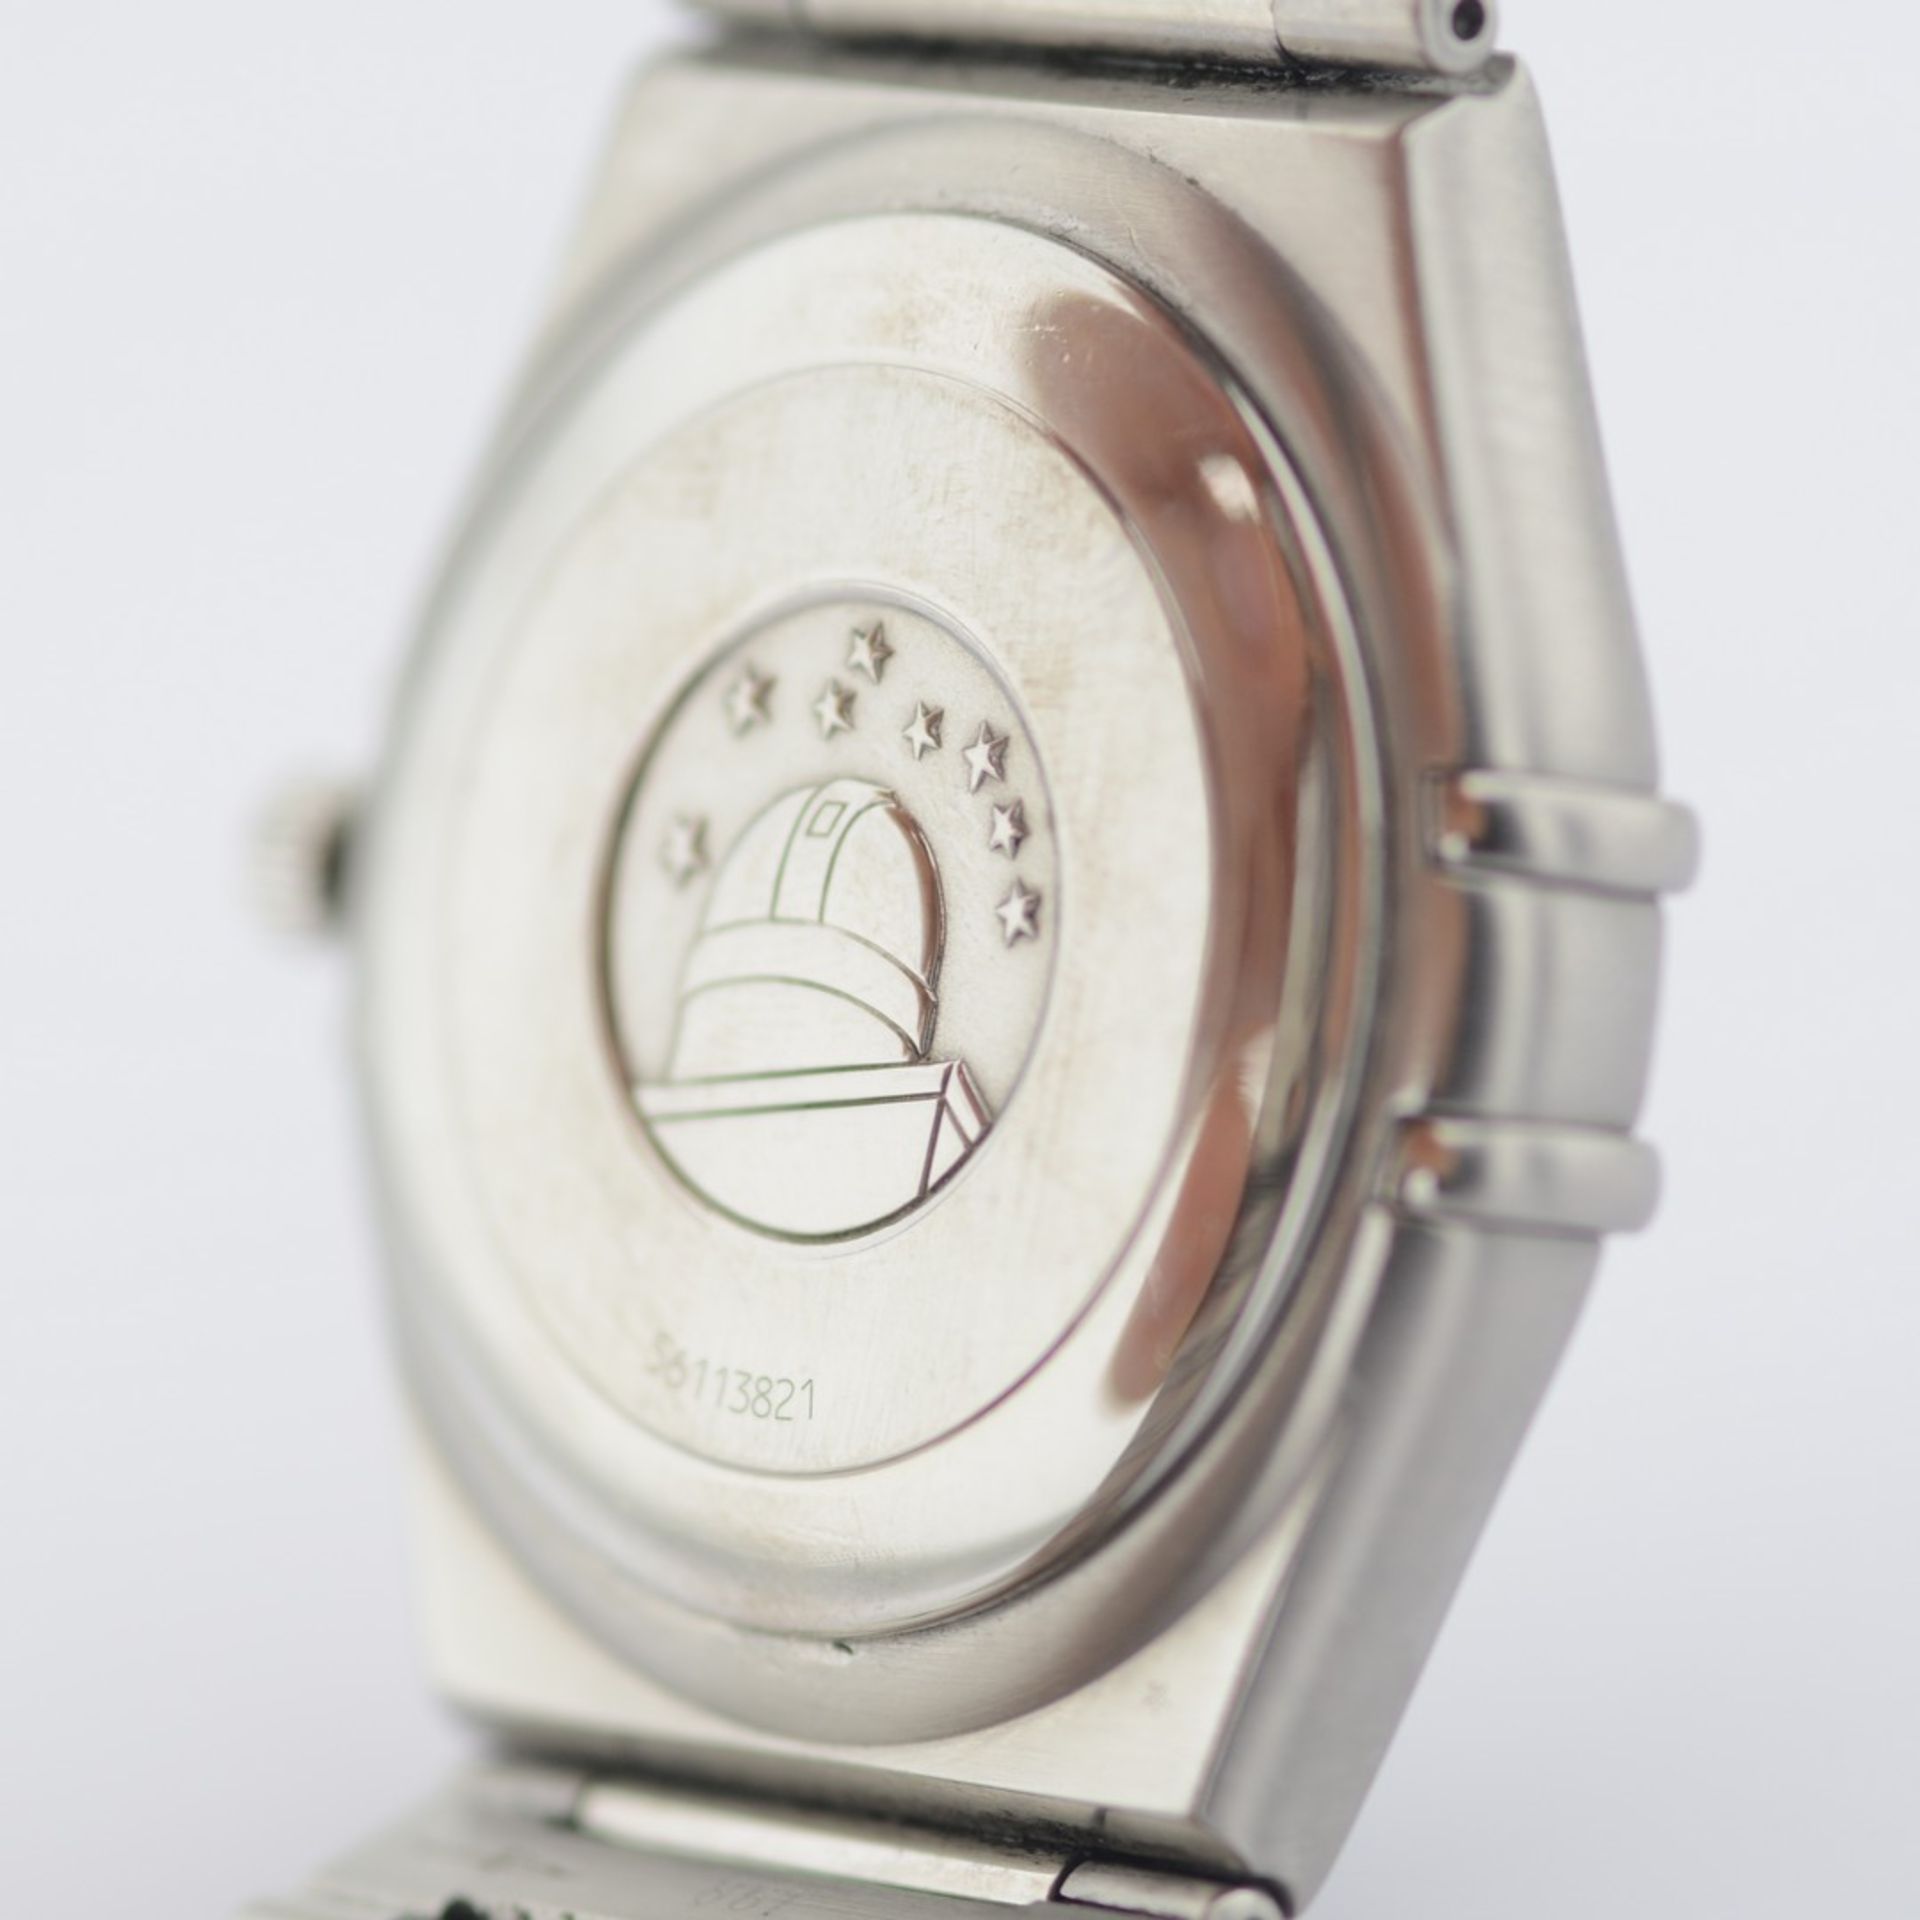 Omega / Constellation Perpetual Calendar - Gentlemen's Steel Wrist Watch - Image 8 of 9